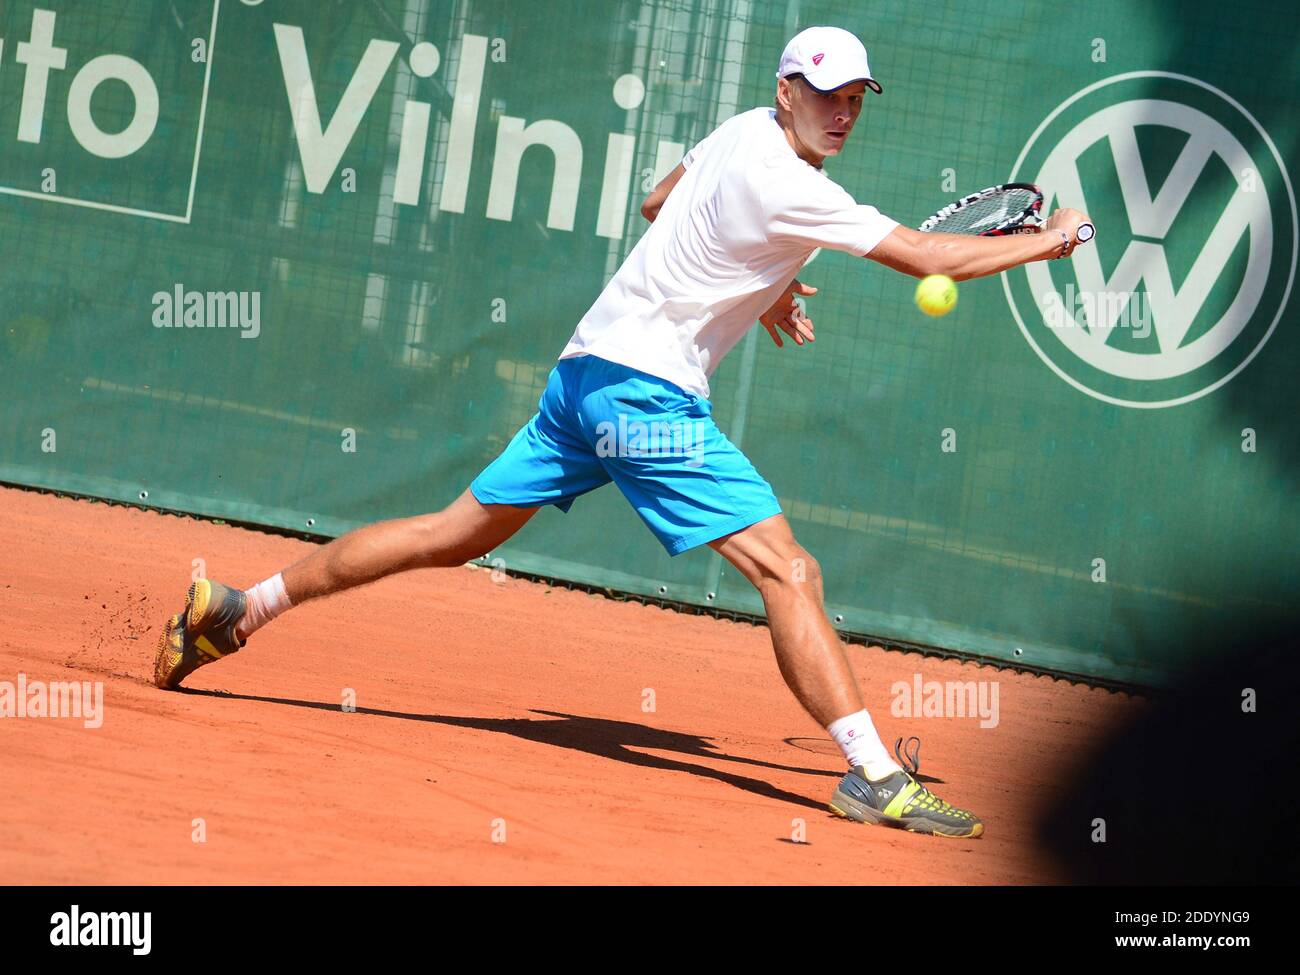 2014-08-02. Lukas Mugevičius è un tennista lituano professionista Foto Stock